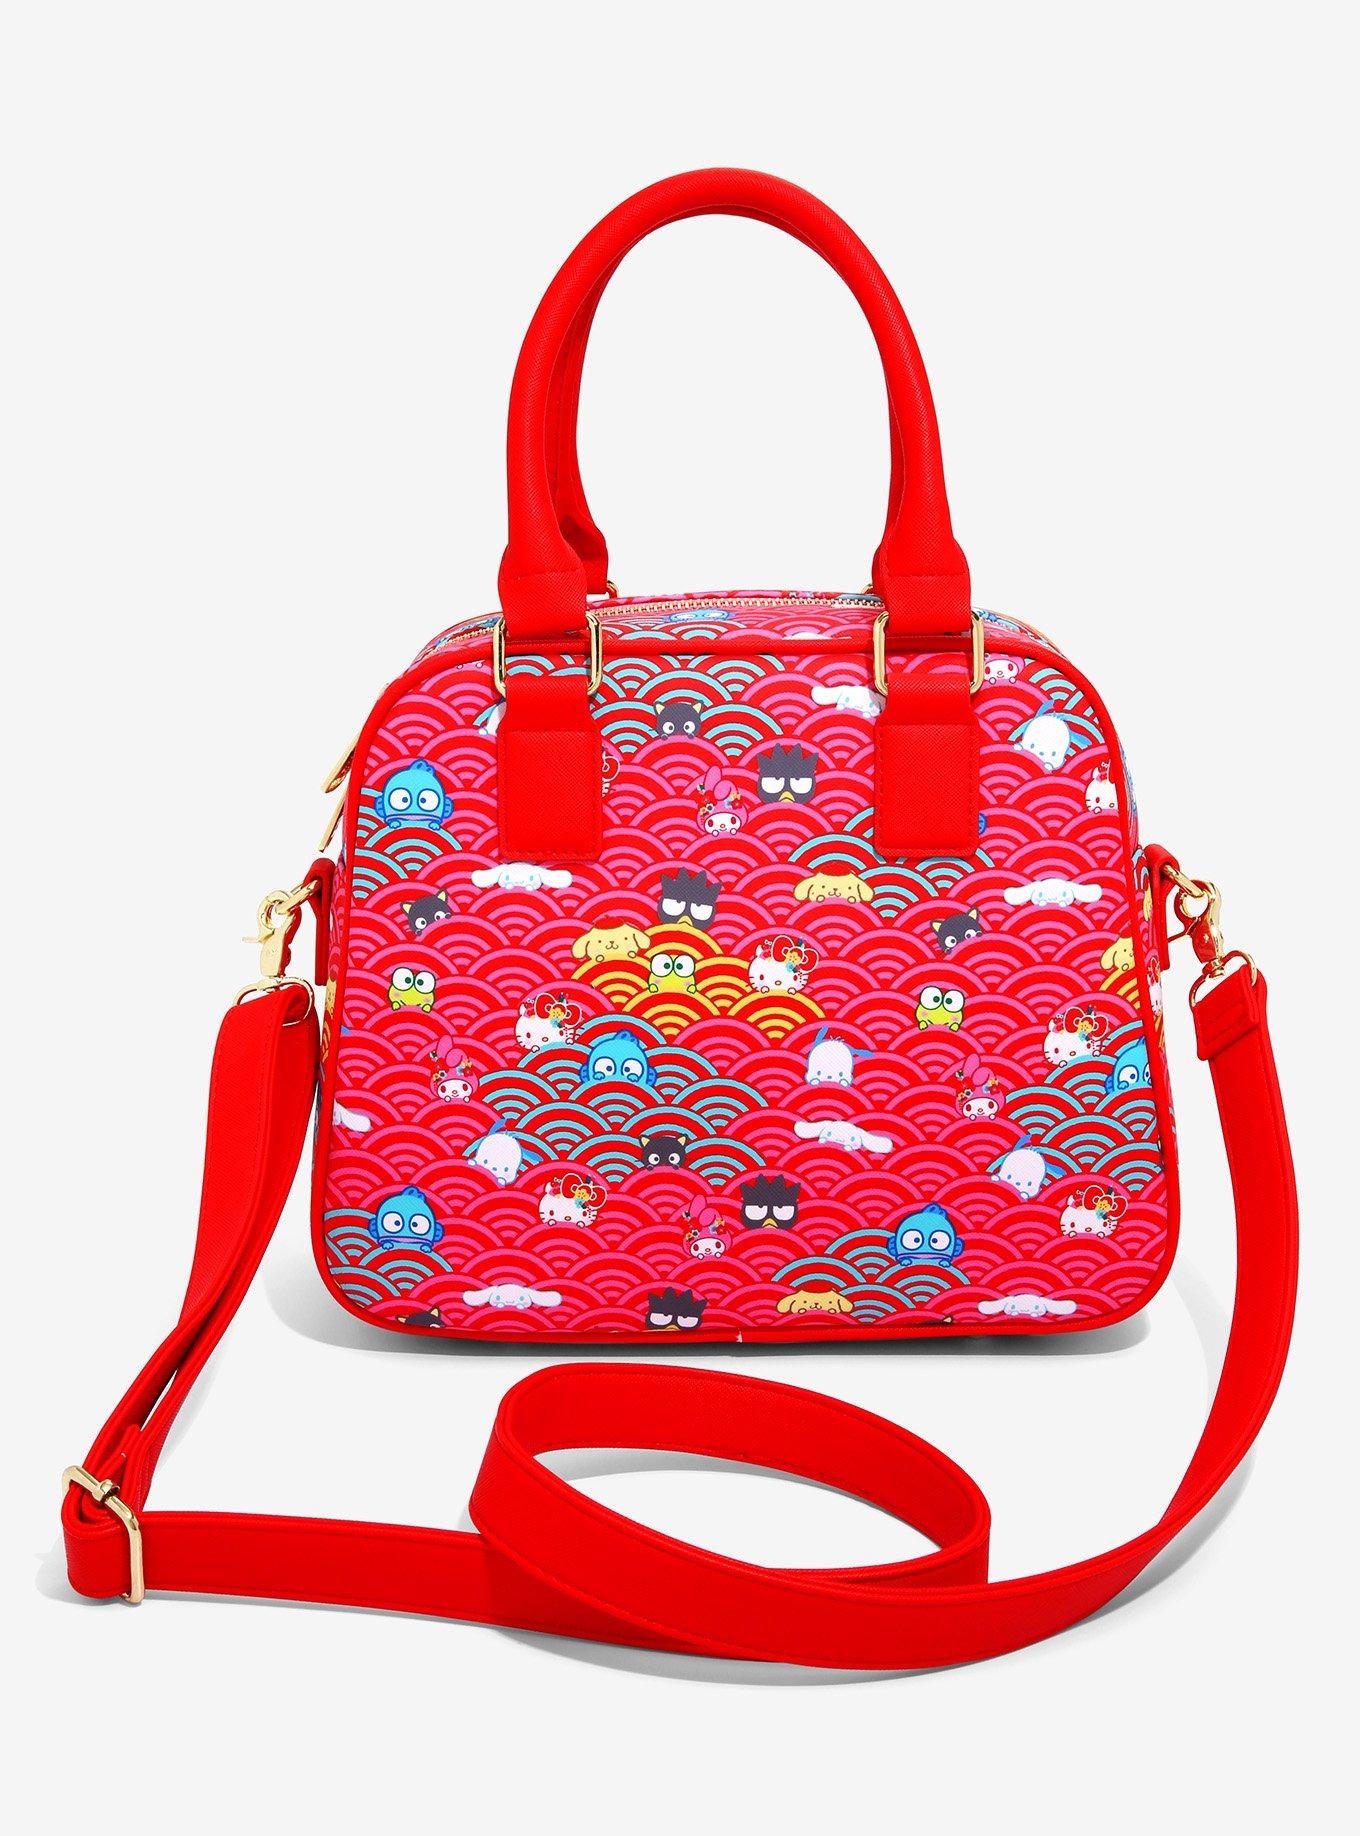 Hello Kitty Loungefly Crossbody Purse Bag Pink New w/ tags SANTB1604 